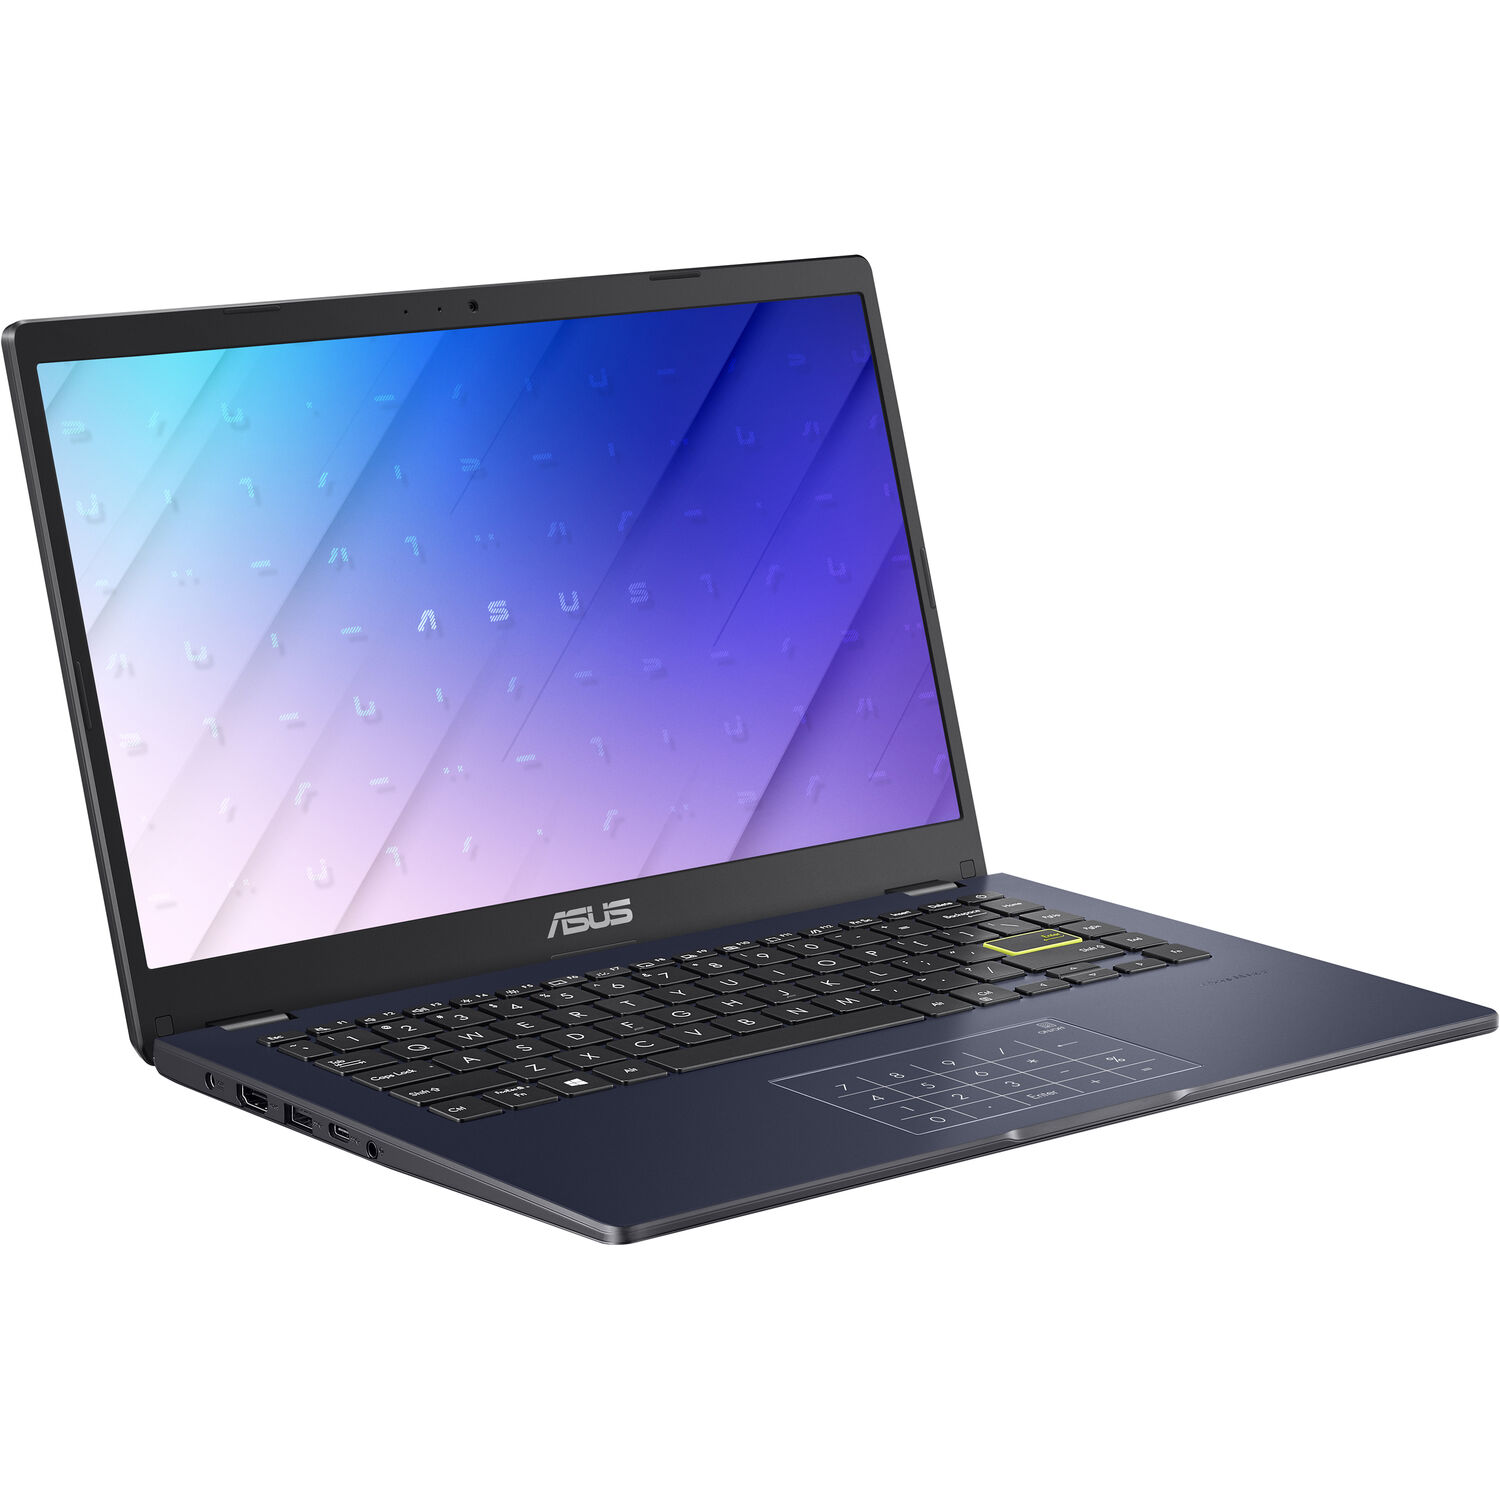 ASUS 14 L410 Everyday Value Laptop (Intel Celeron N4020 2-Core, 4GB RAM, 128GB PCIe SSD, 14.0" Full HD (1920x1080), Intel UHD 600, Wifi, Bluetooth, Webcam, 1xUSB 3.2, 1xHDMI, Win 10 Home) - image 2 of 6